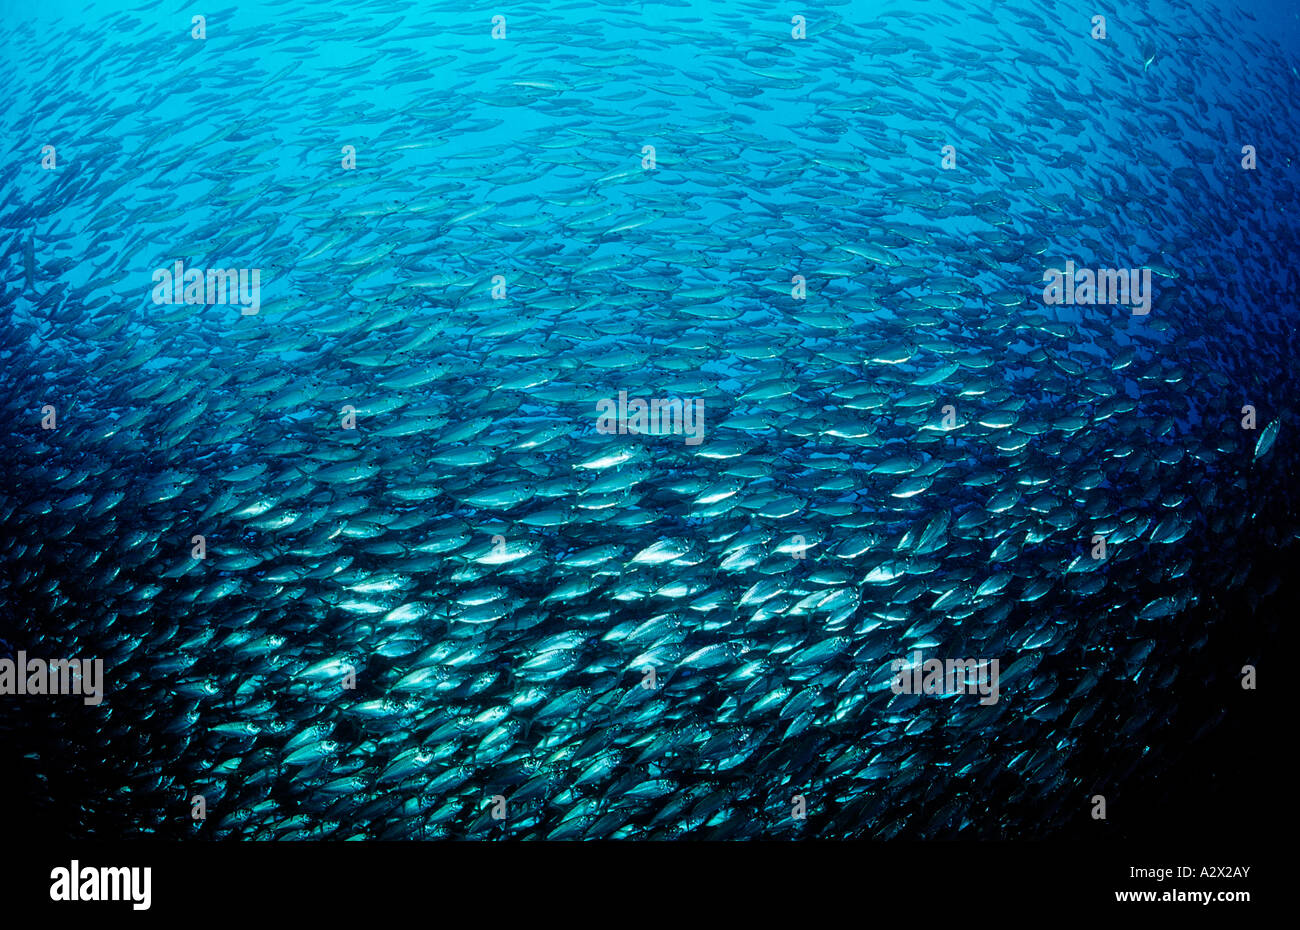 Schooling Pacific chub mackerel Macarela estornino Scomber japonicus Mexico Sea of Cortez Baja California La Paz Stock Photo